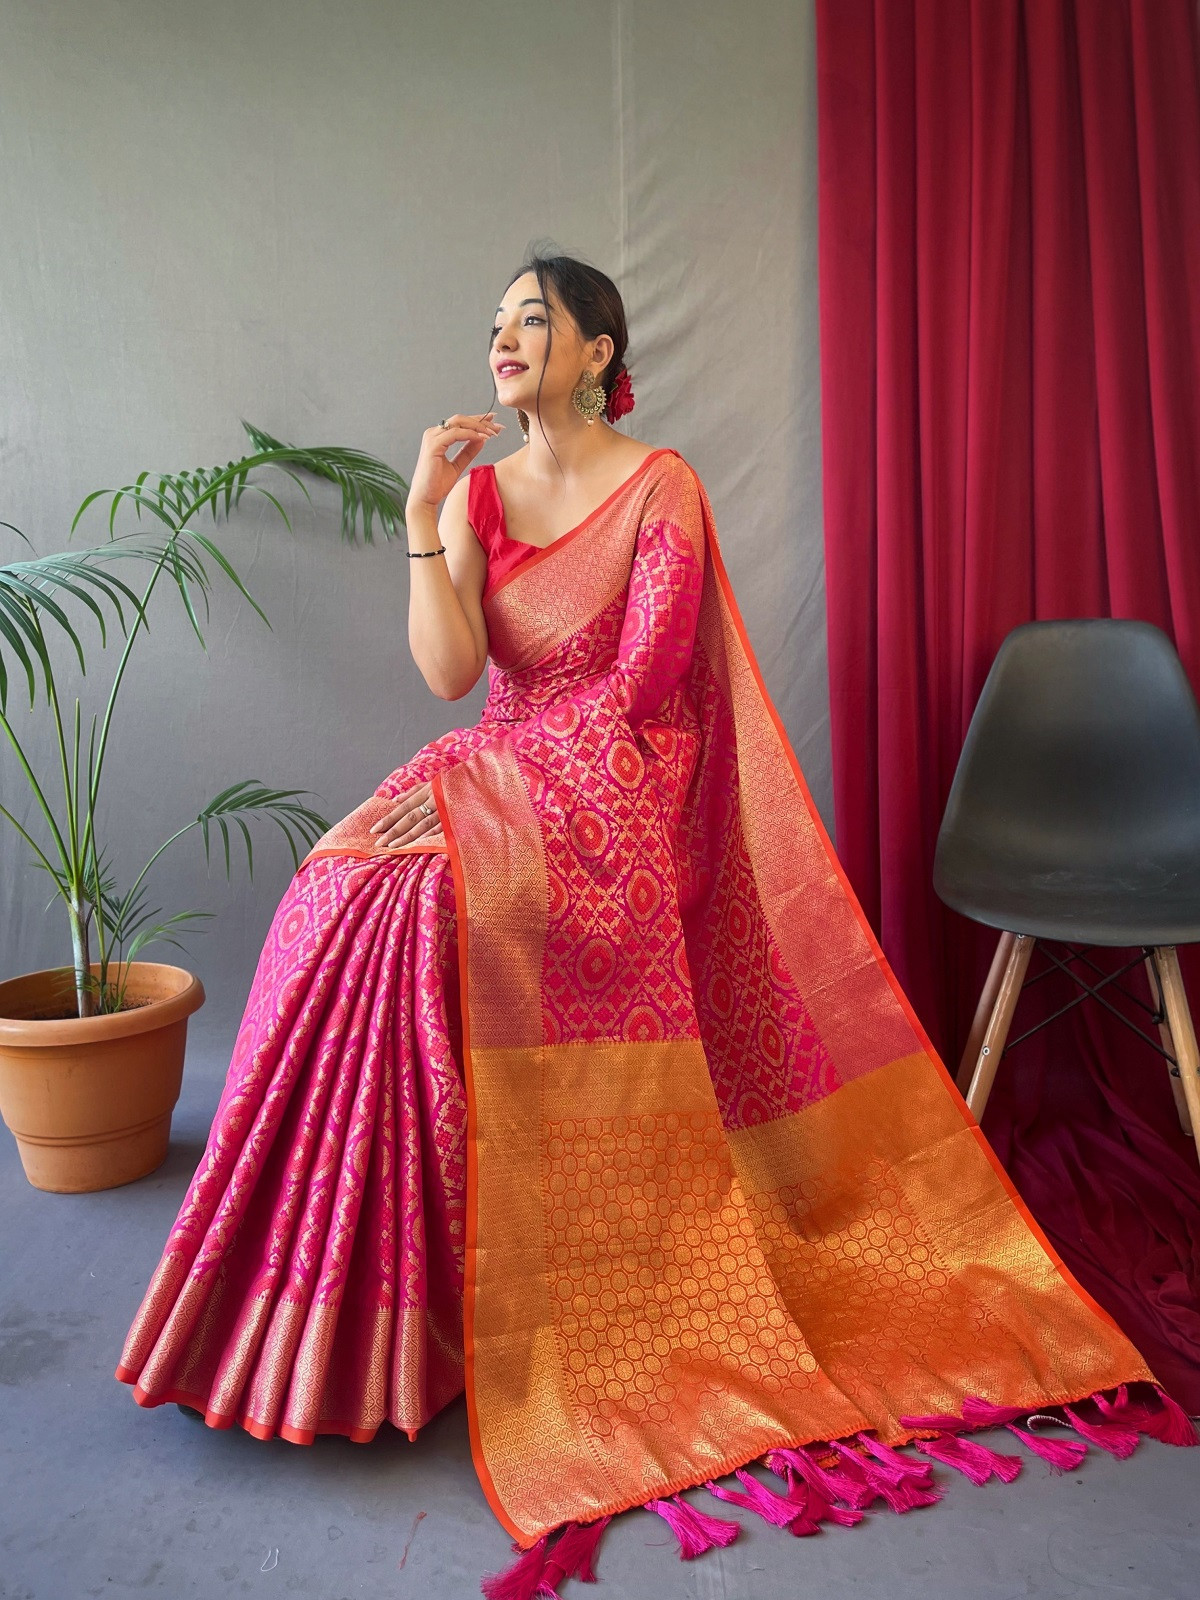 Patola Silk sari gold Zari meenakari weave border Pallu - Pink-Peach